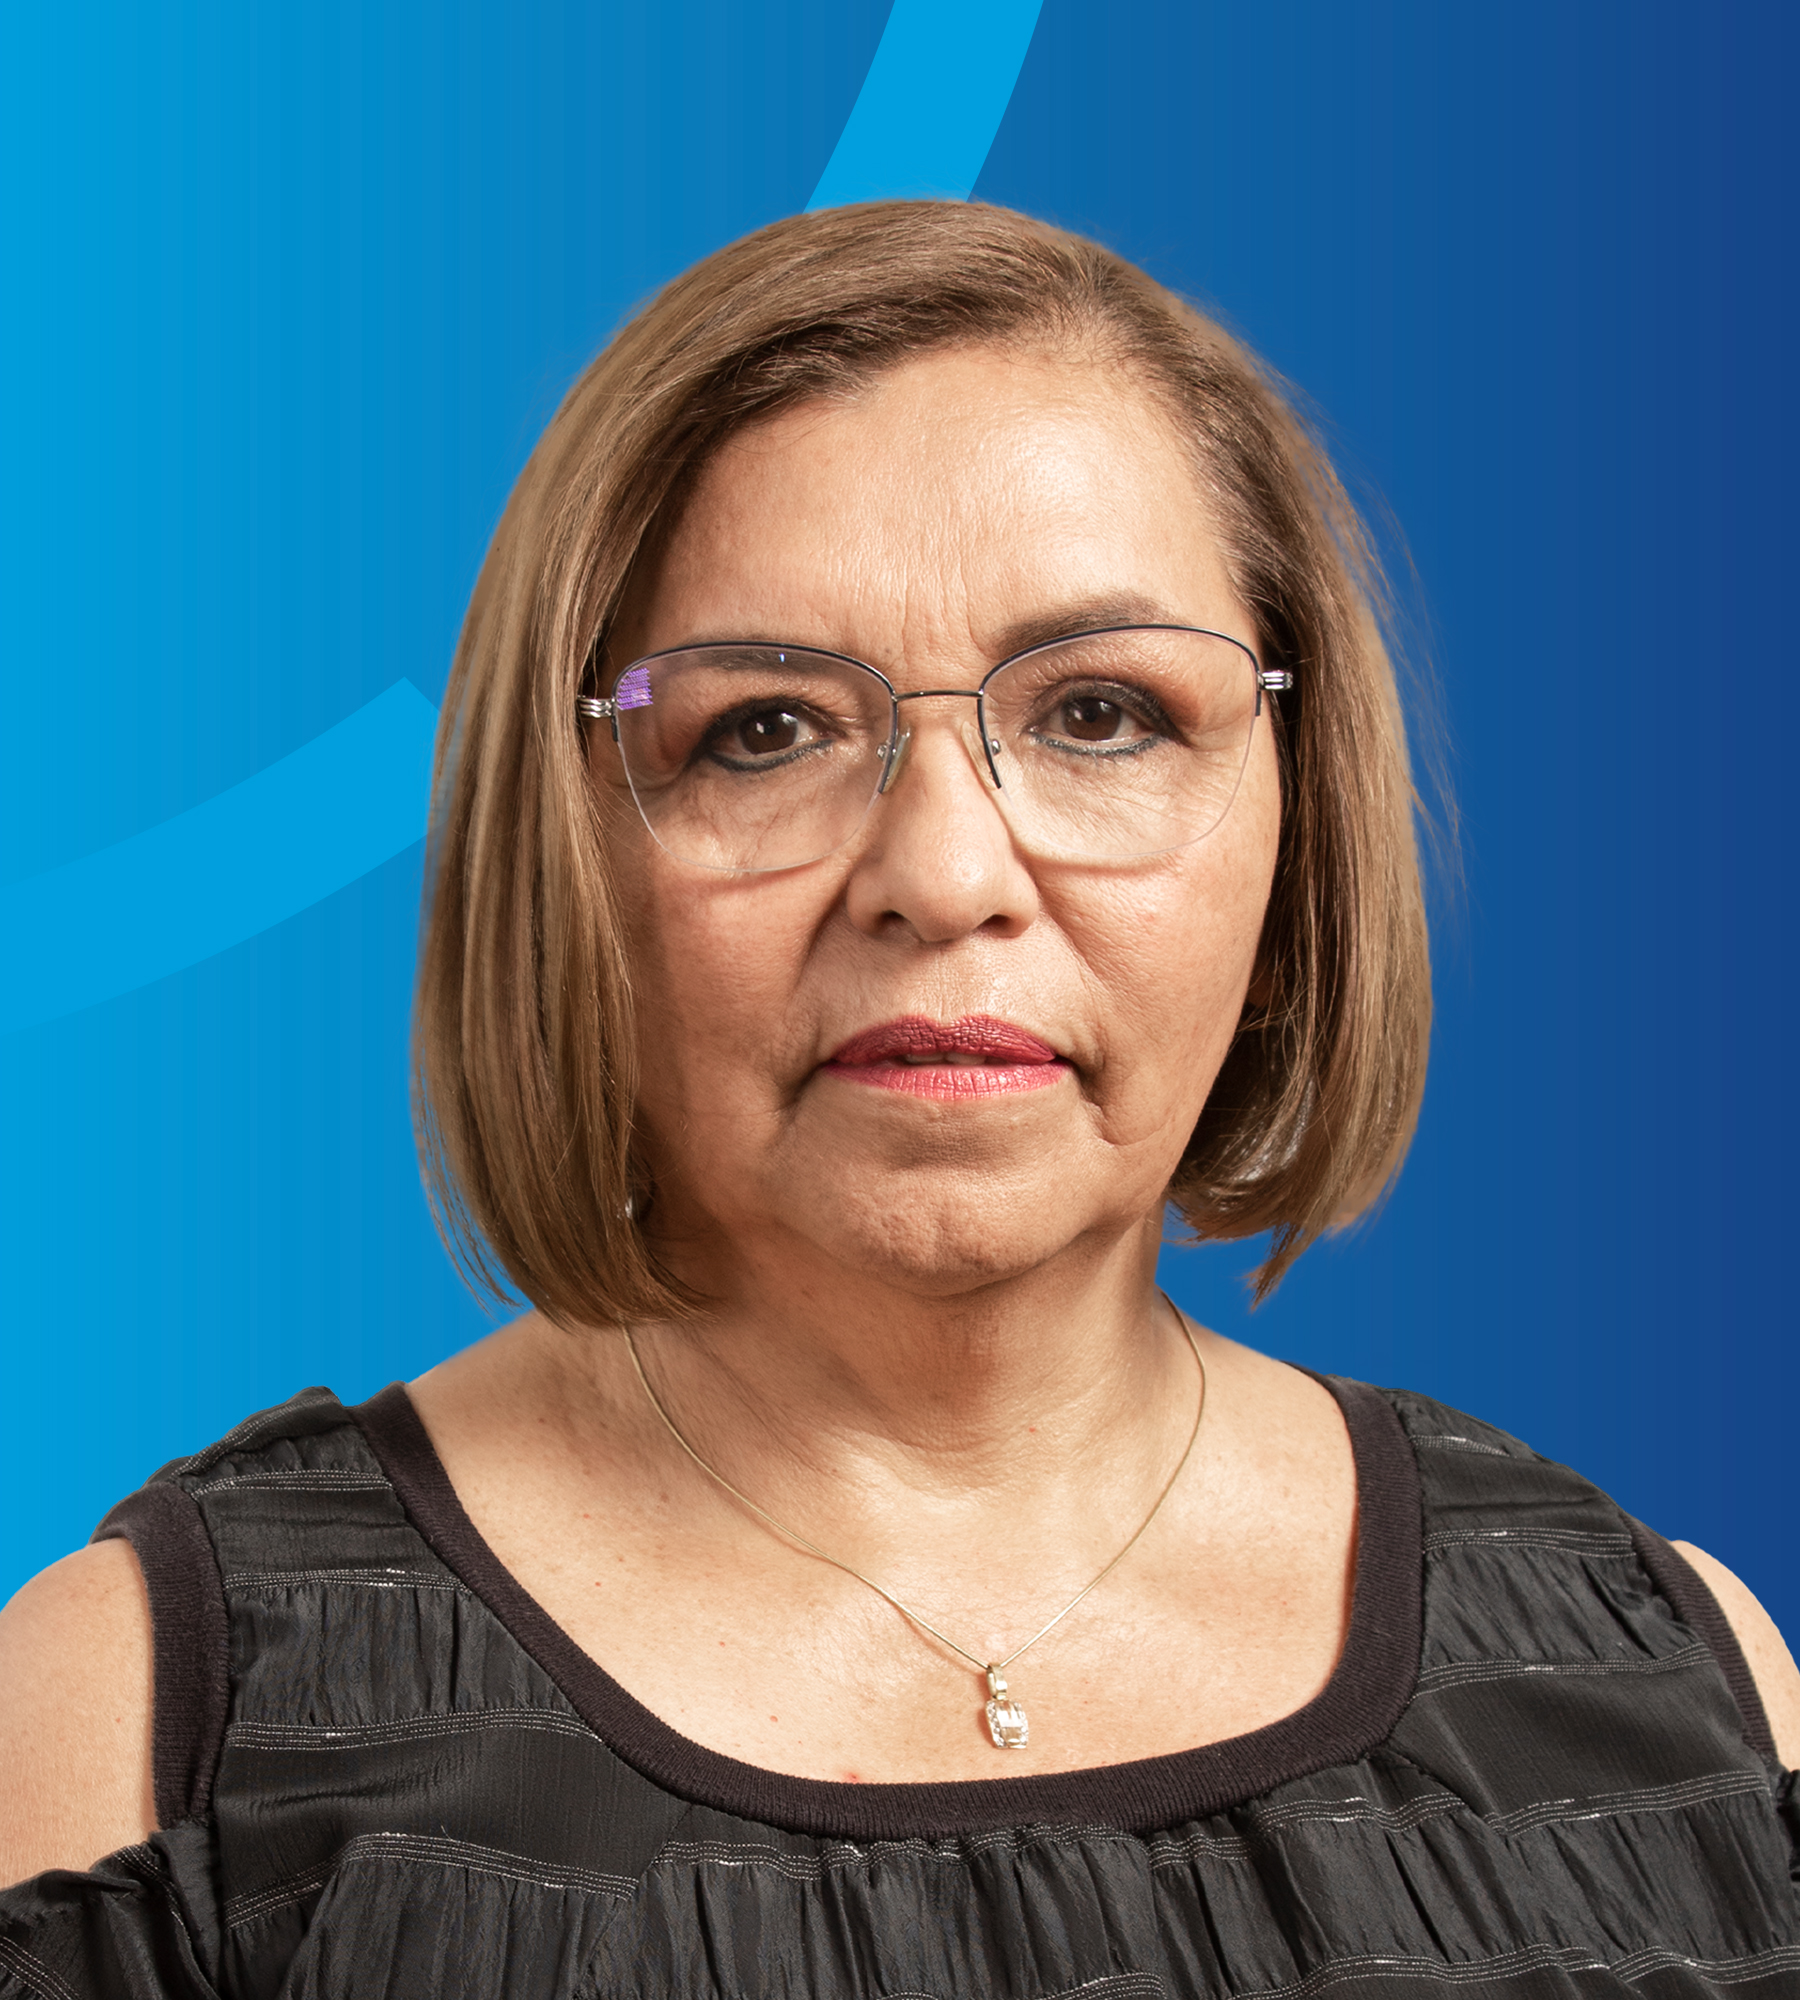 Mgtr. Ruth Ruiz Flores